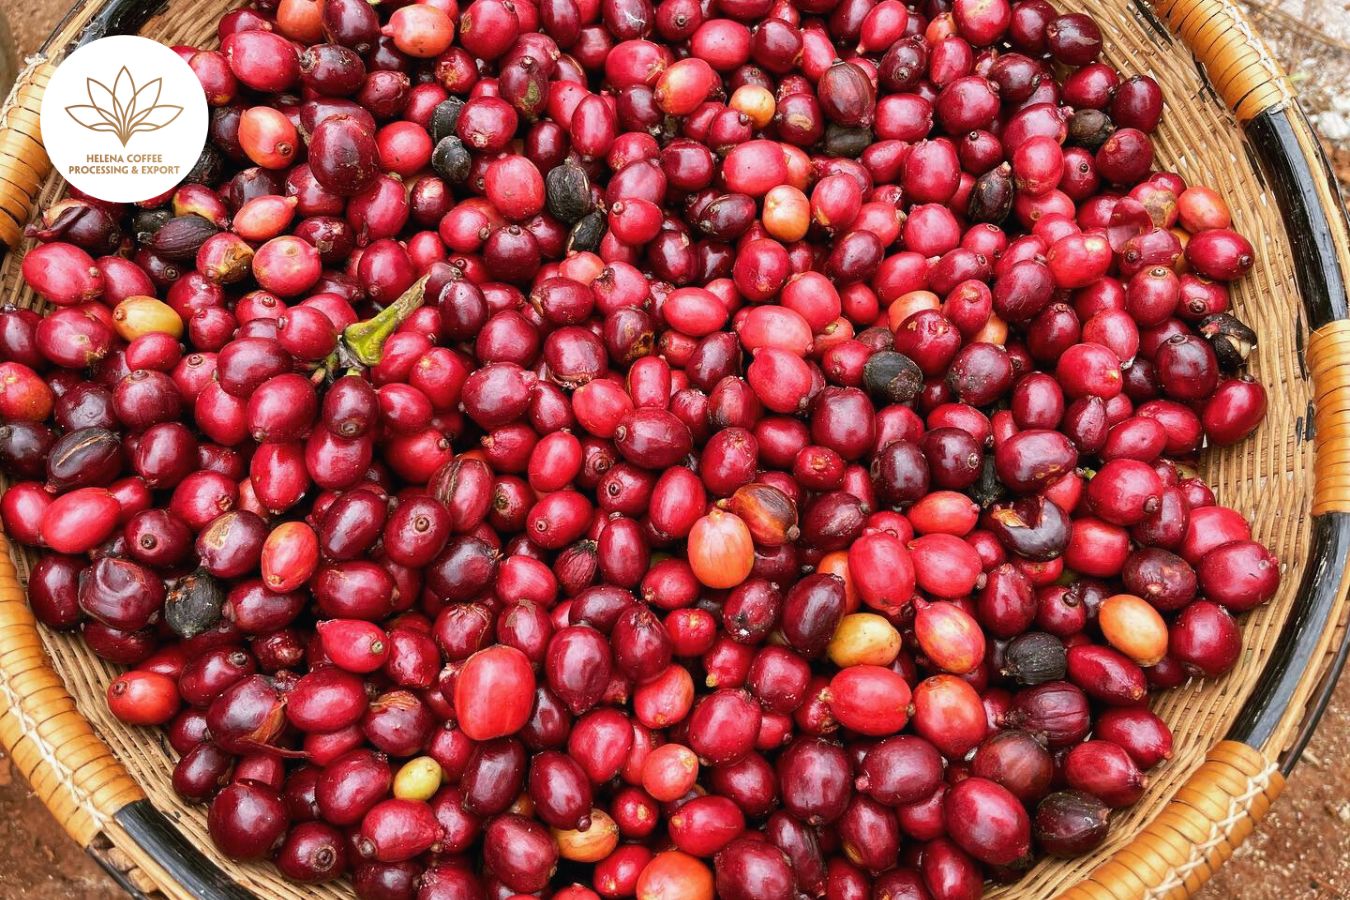 Specialty Coffee Supplier Vietnam's Premier Specialty Coffee Supplier for Exceptional Wholesale Beans